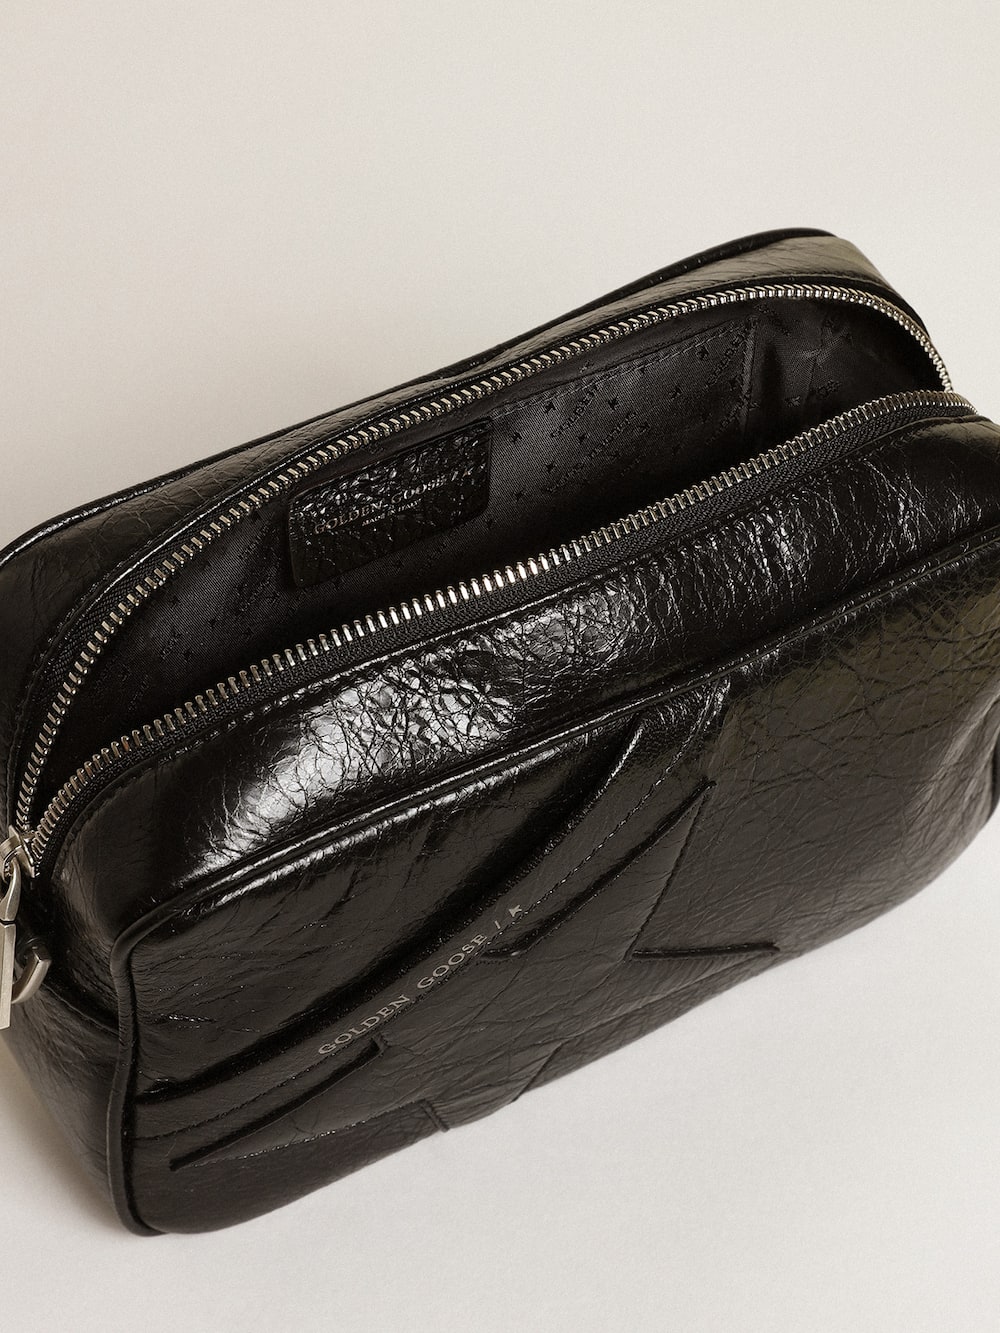 Golden Goose - Star Bag in pelle lucida nero con stella ton sur ton in 